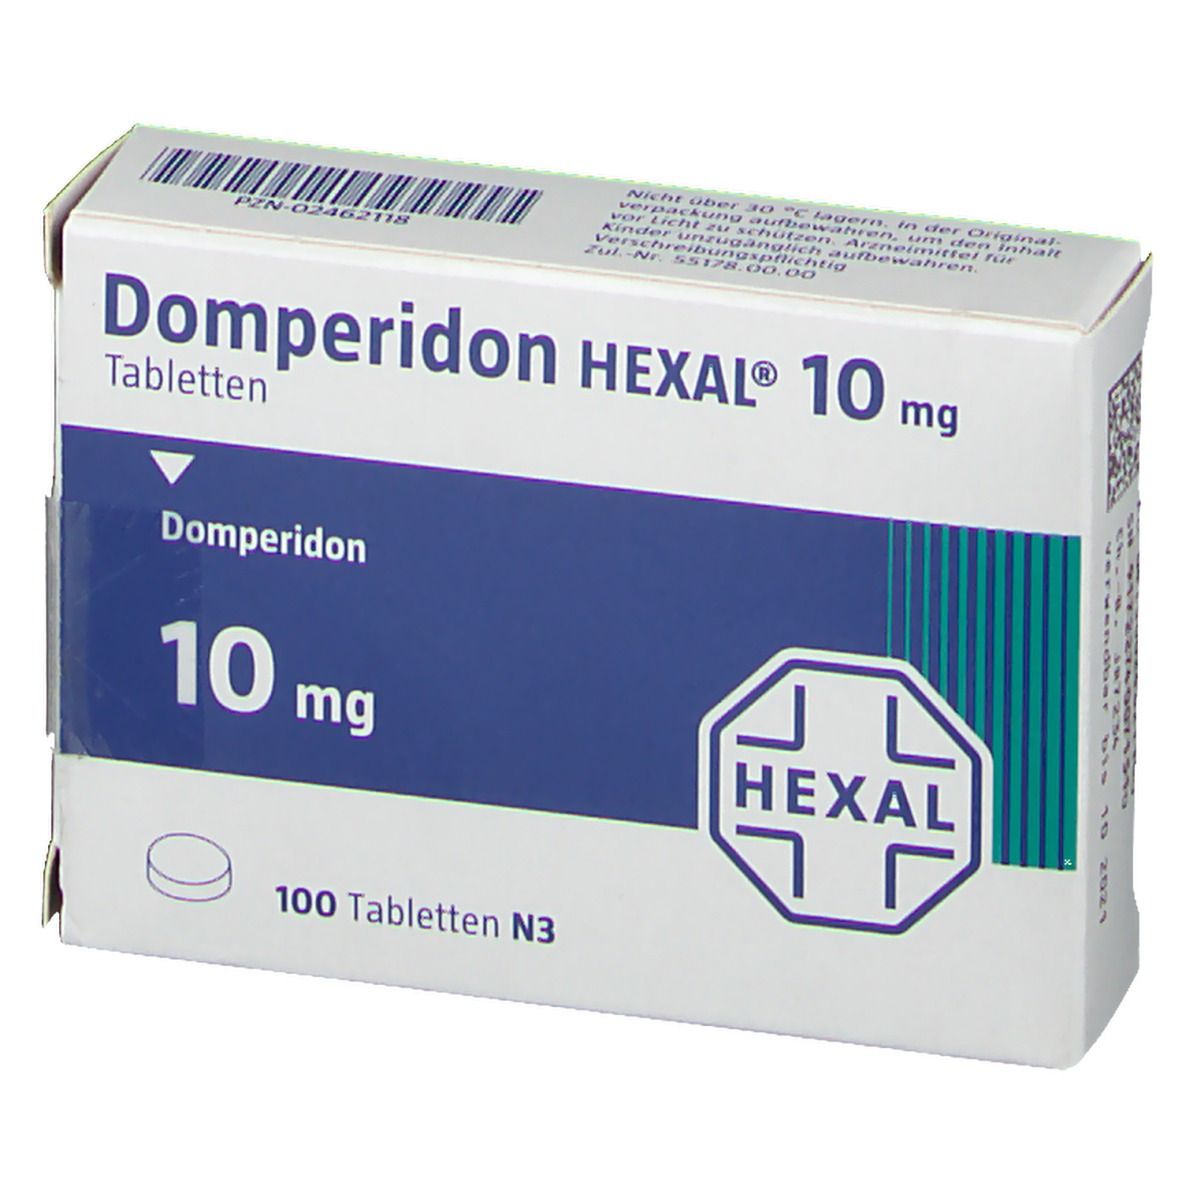 Domperidon HEXAL® 10 mg